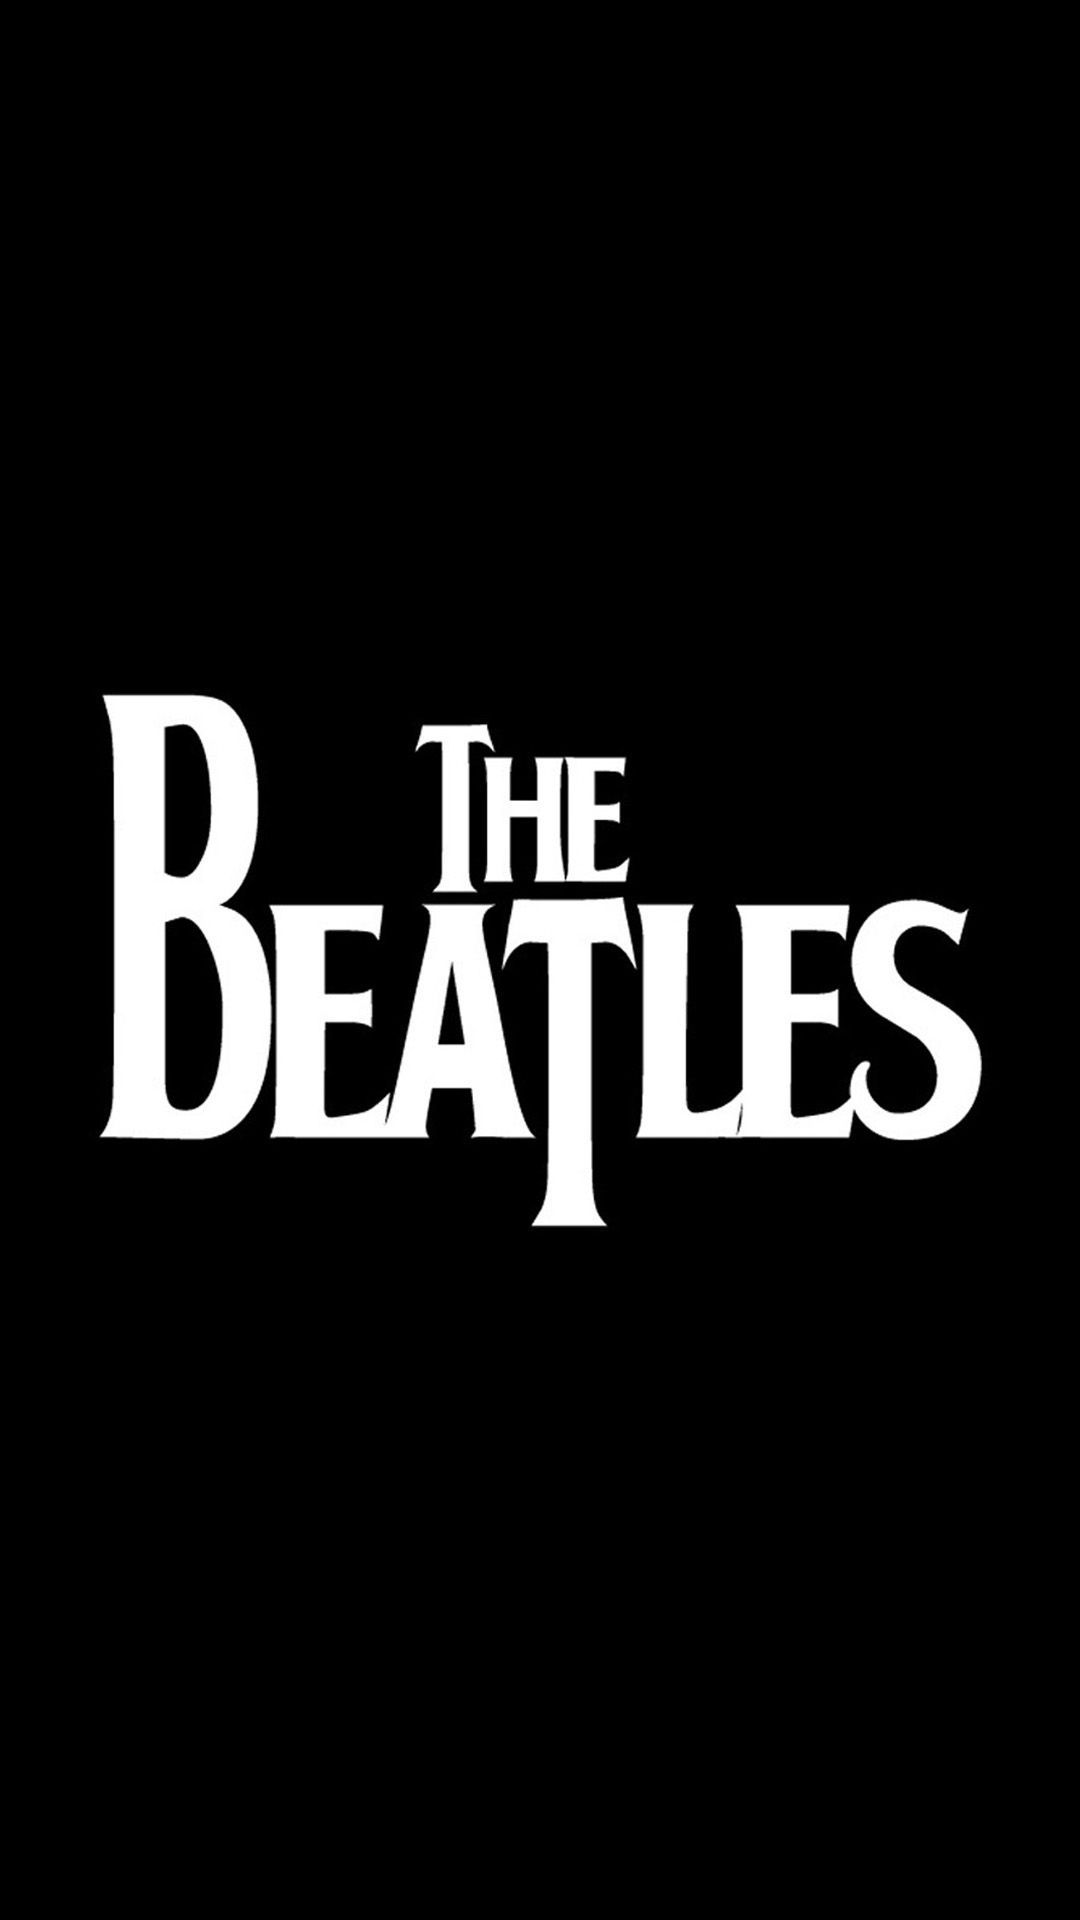 The Beatles Logo Wallpaper Free The Beatles Logo Background